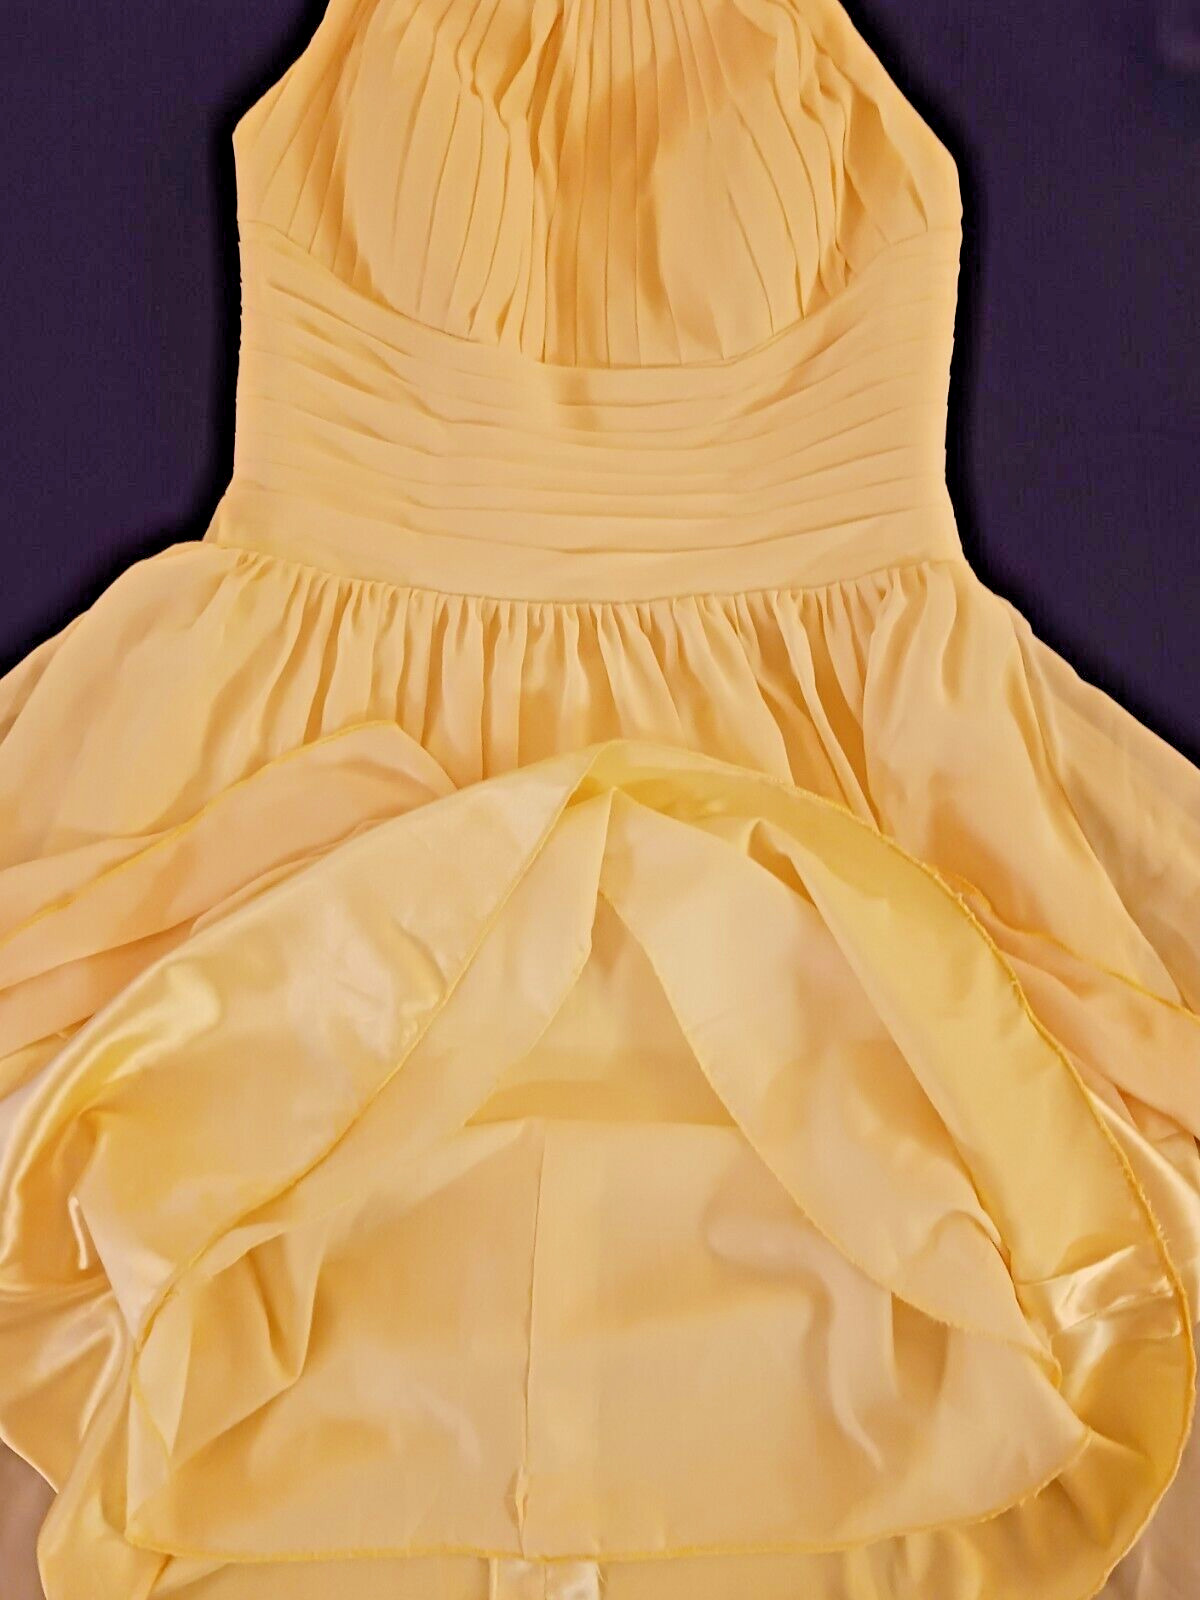 VINTAGE 1960s COCKTAIL DRESS Plus-Size 20 22 Bust 40 42  Yellow CHIFFON & SATIN